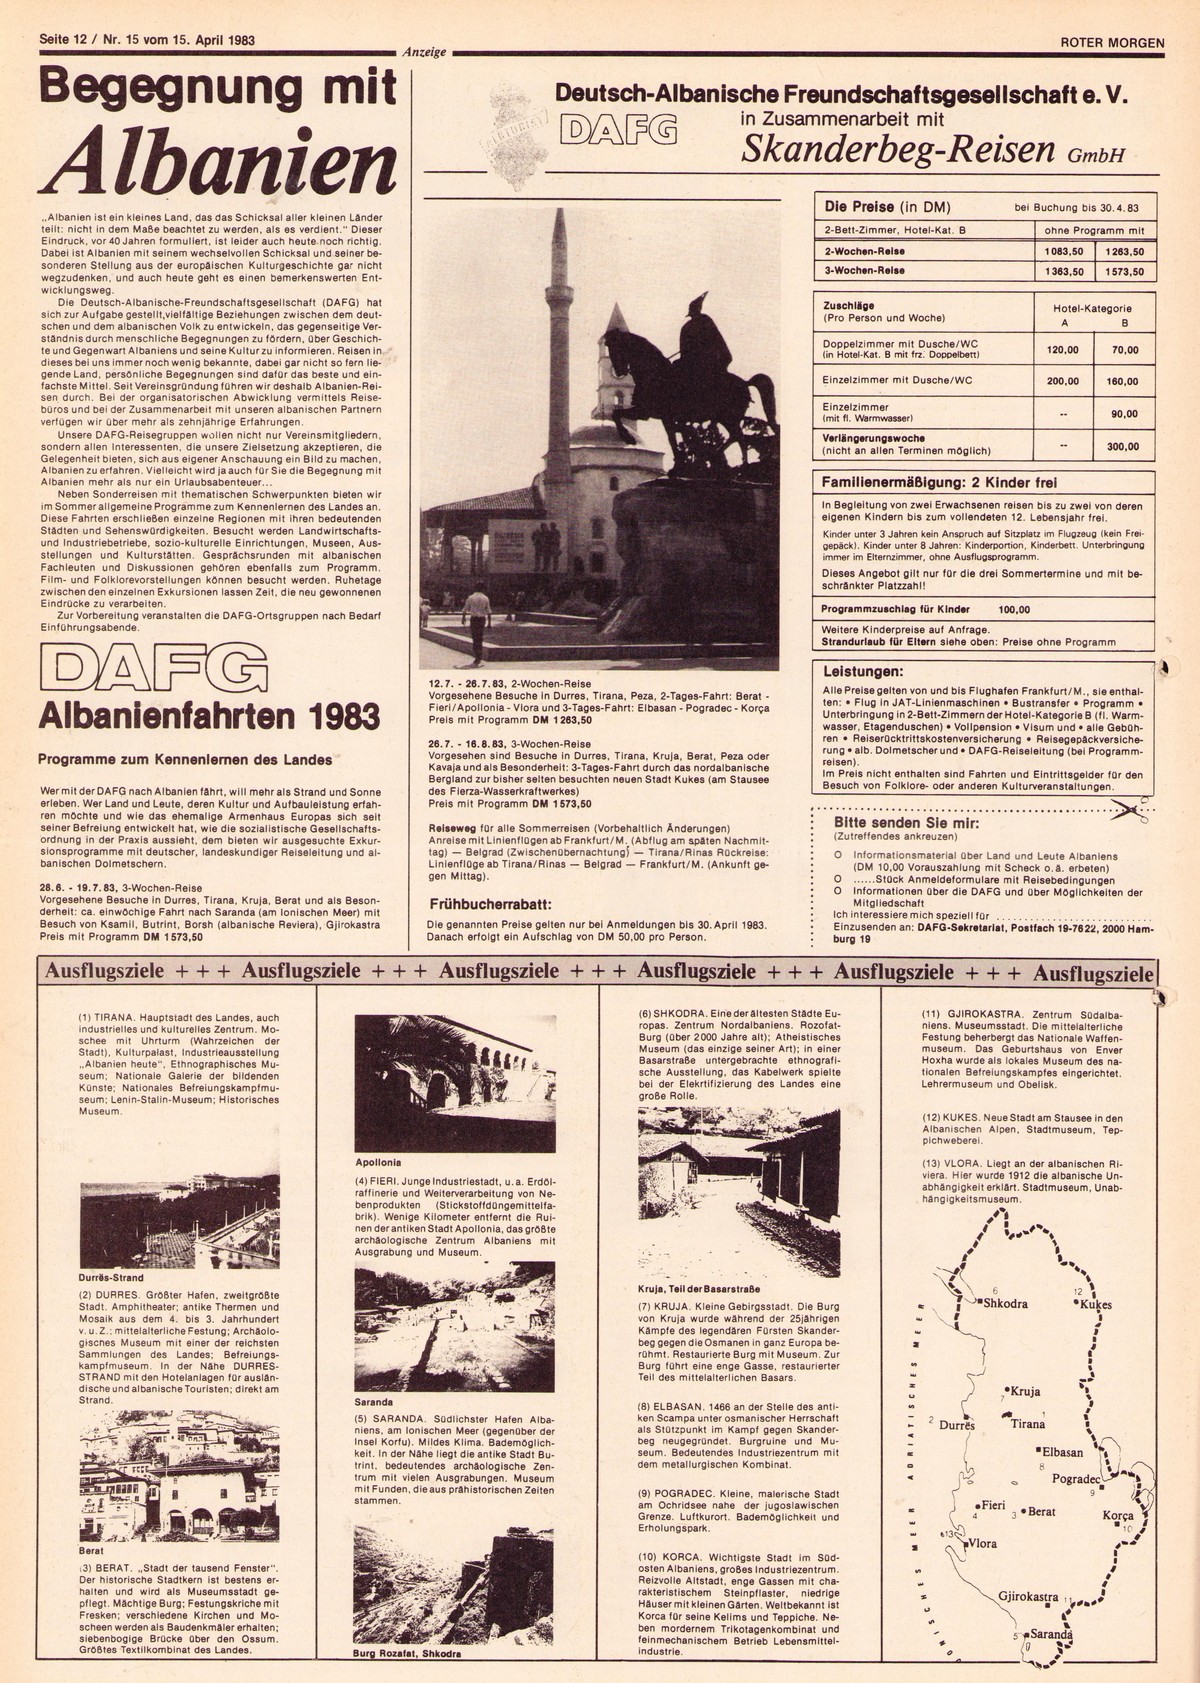 Roter Morgen, 17. Jg., 15. April 1983, Nr. 15, Seite 12